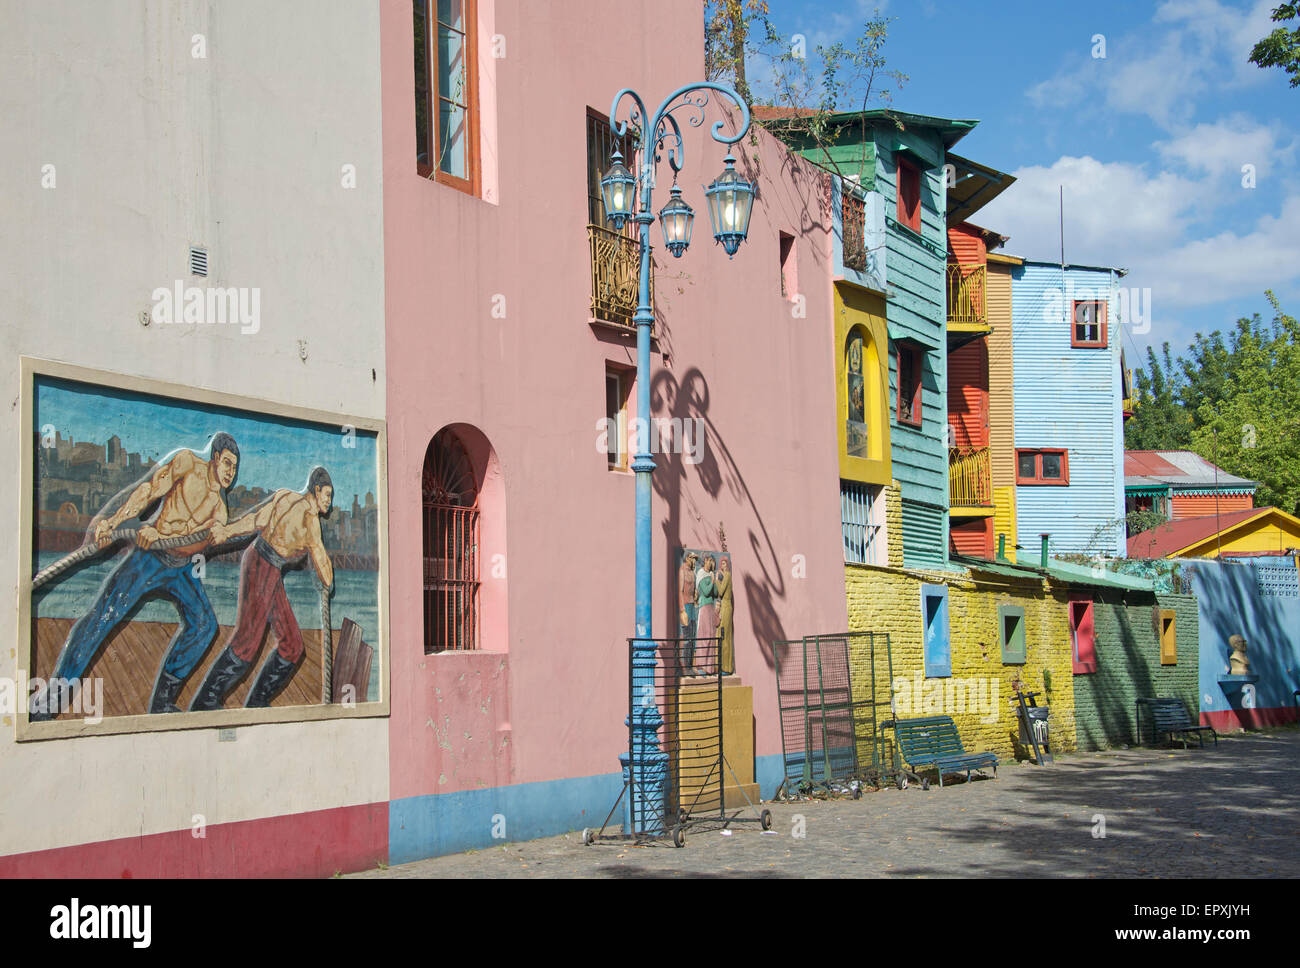 Colourful painted buildings La Boca Buenos Aires Argentina Stock Photo